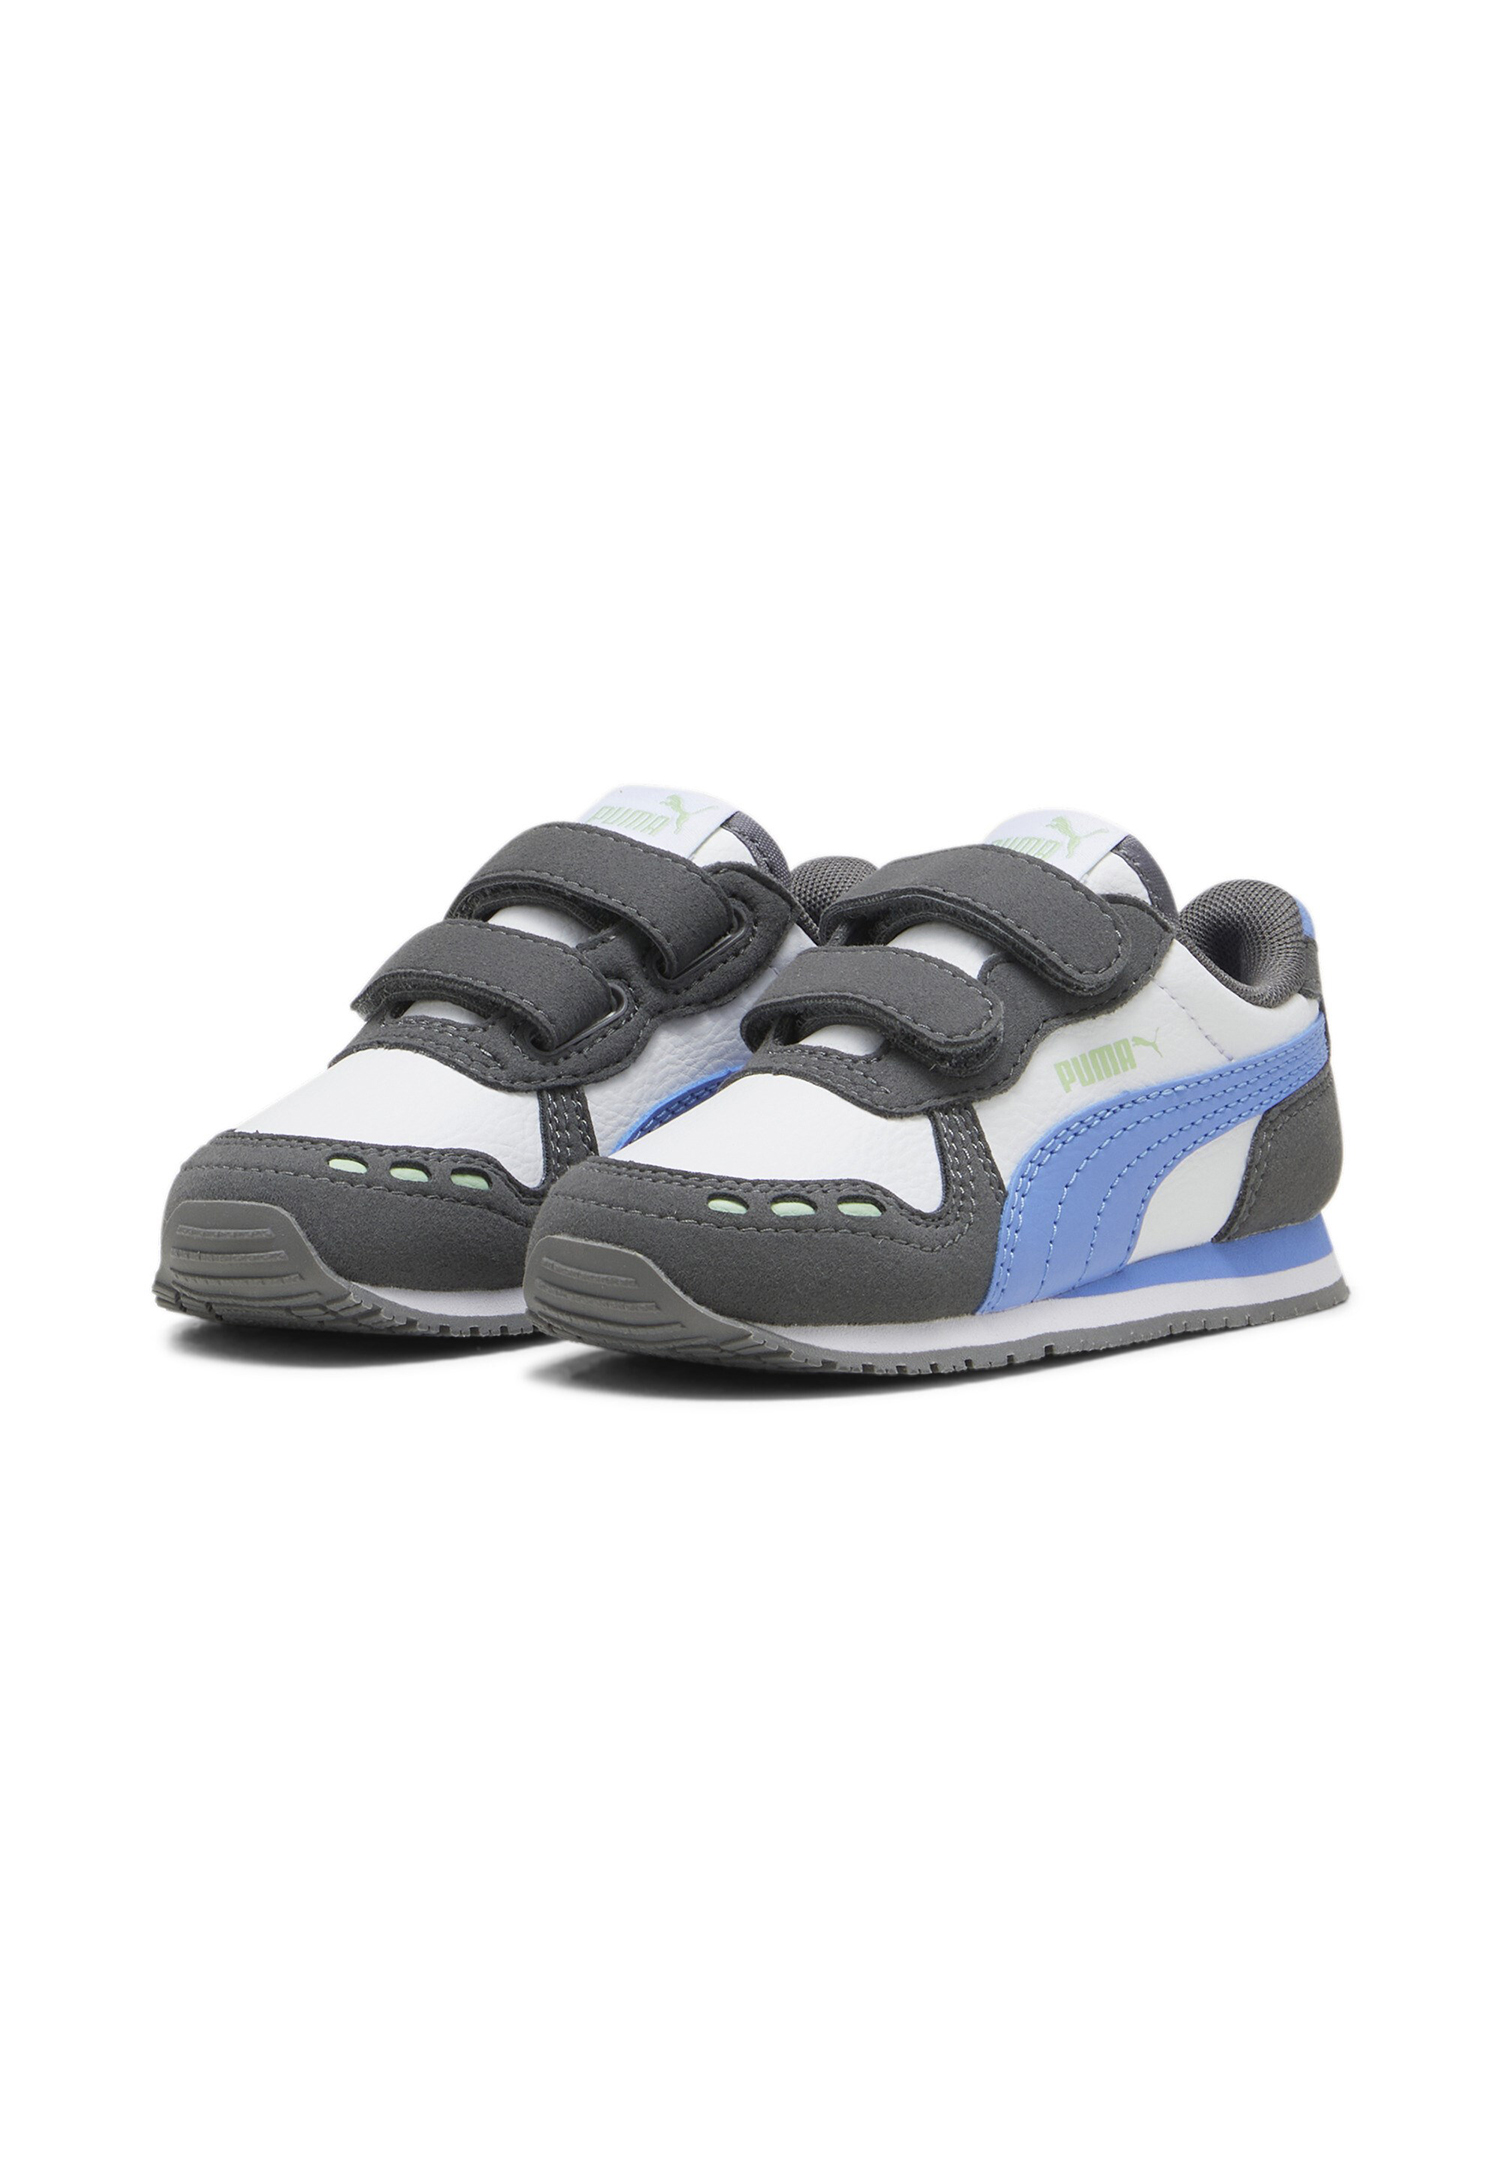 PUMA Cabana Racer SL 20 V Inf Kinder Sneaker Turnschuhe 383731 15 grau/blau/weiß